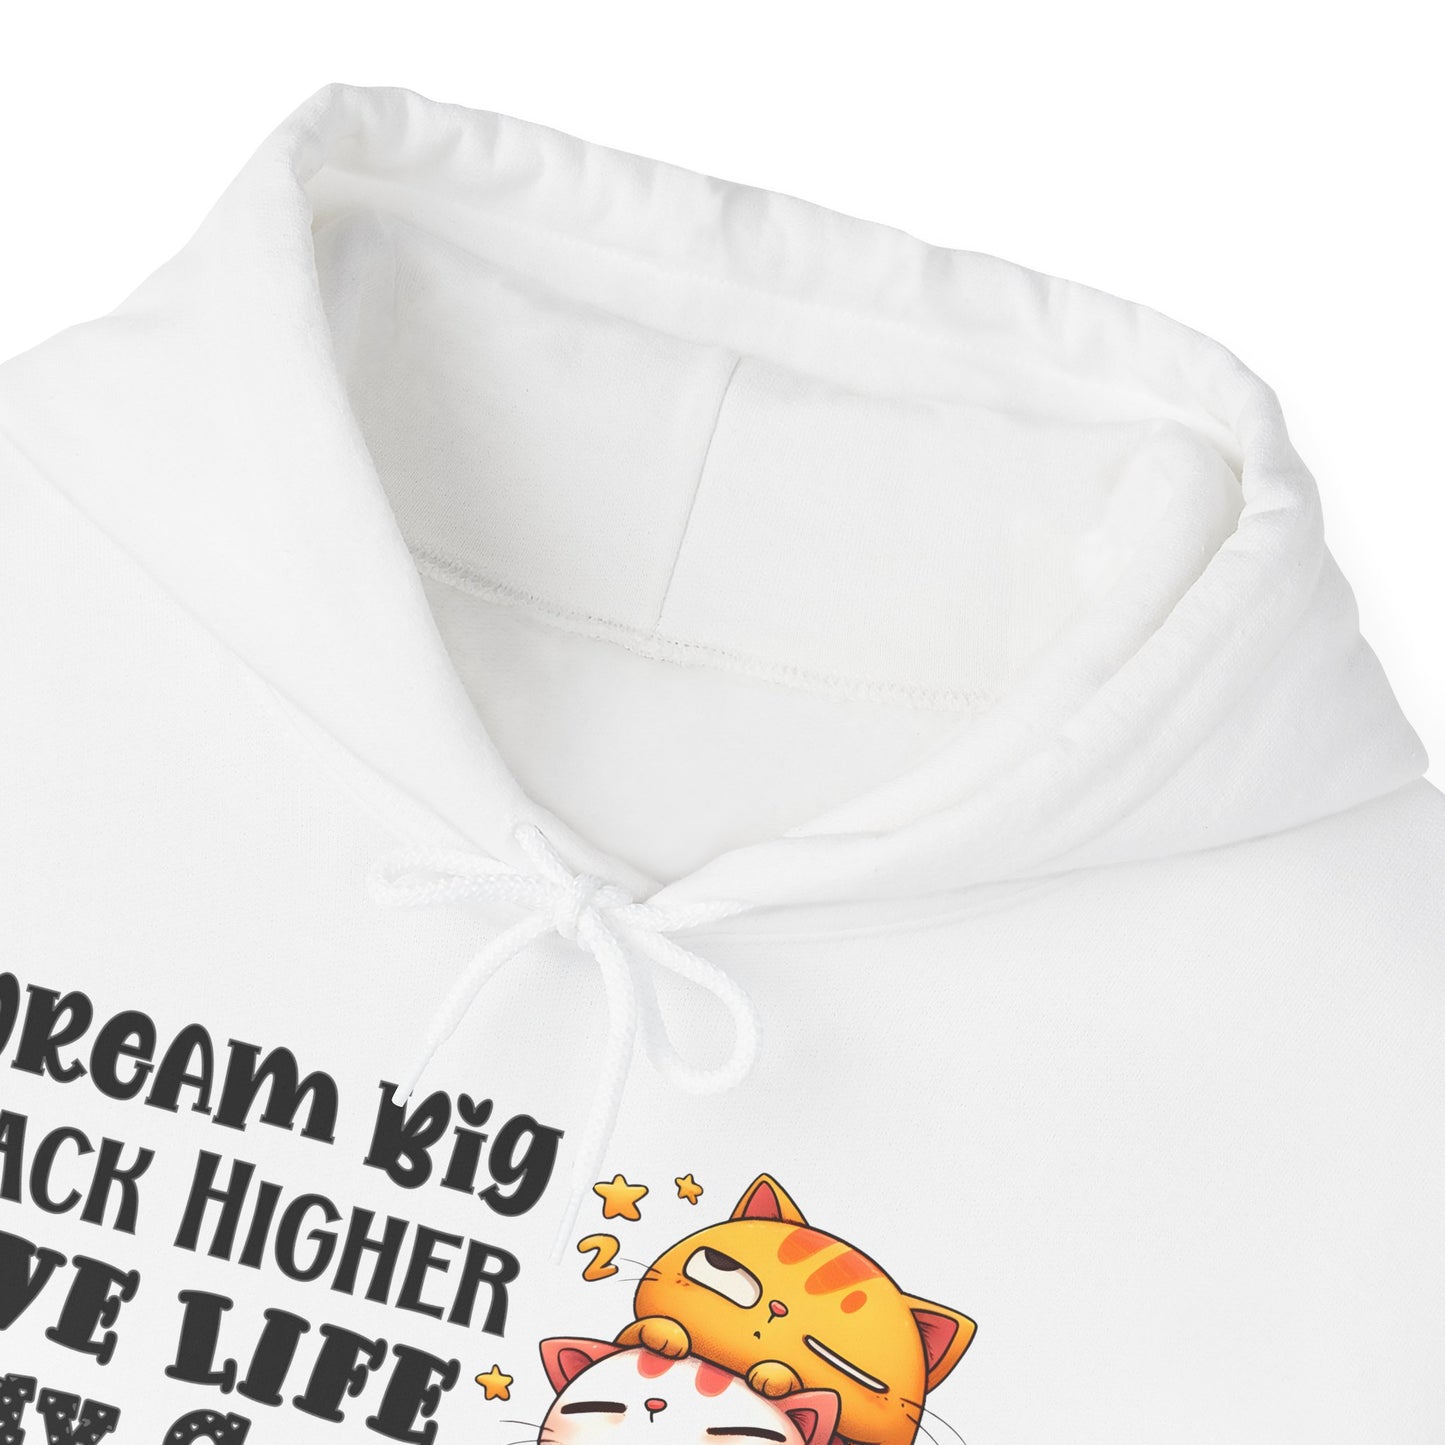 Dream Big Stack Higher Unisex Heavy Blend™ Hooded Sweatshirt, Gildan · 18500